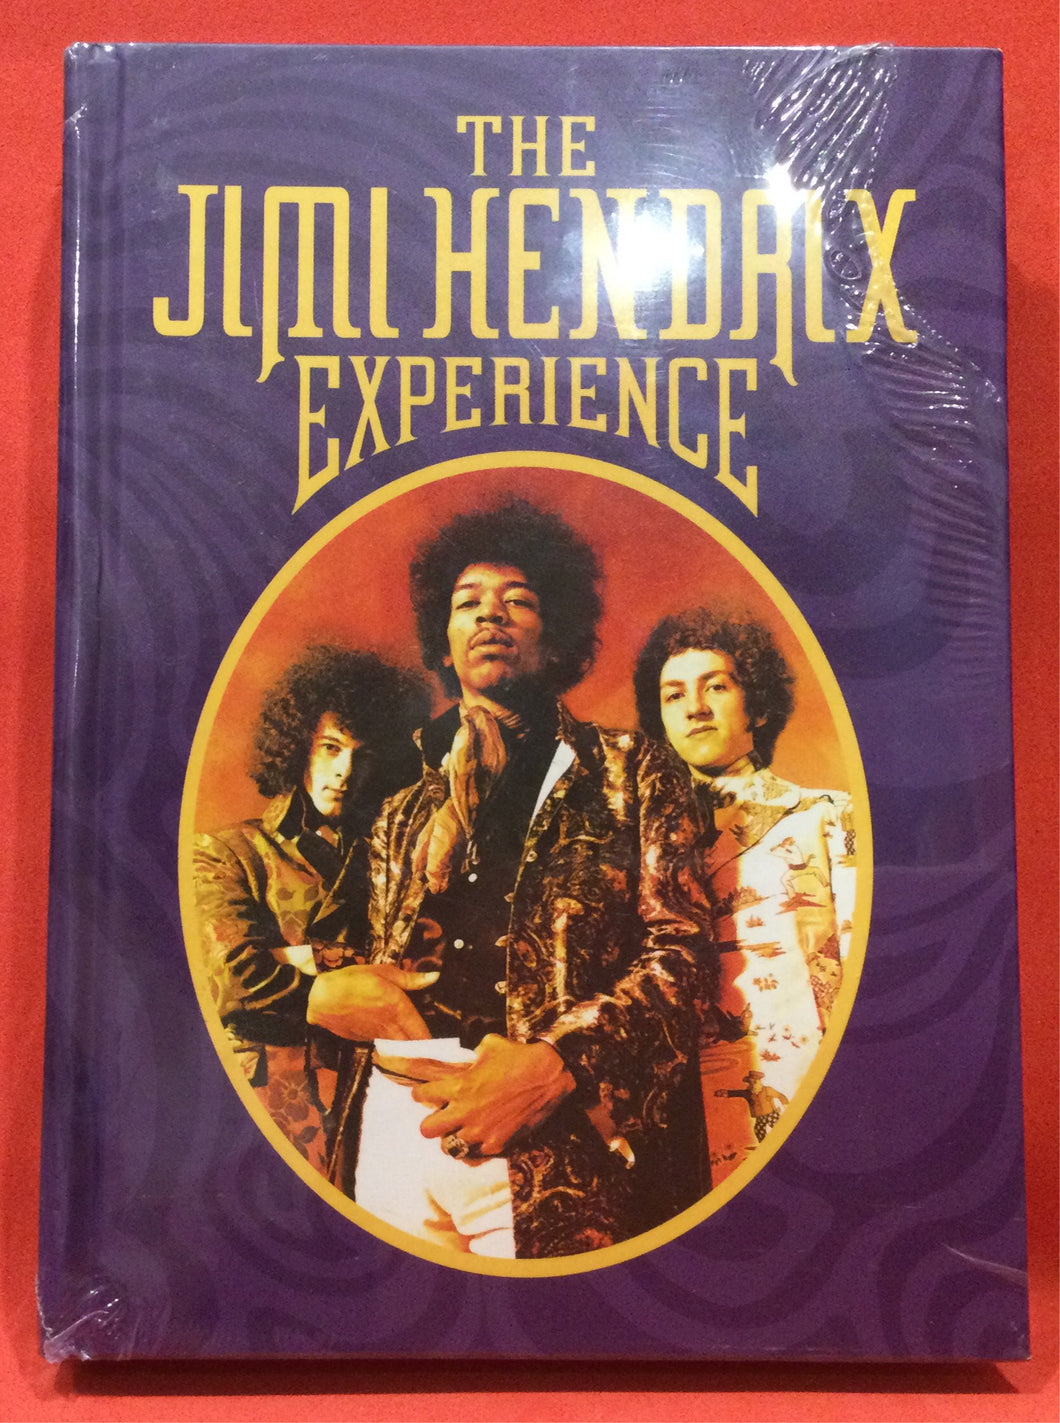 JIMI HENDRIX EXPERIENCE, THE - 4 CD DISCS (SEALED)